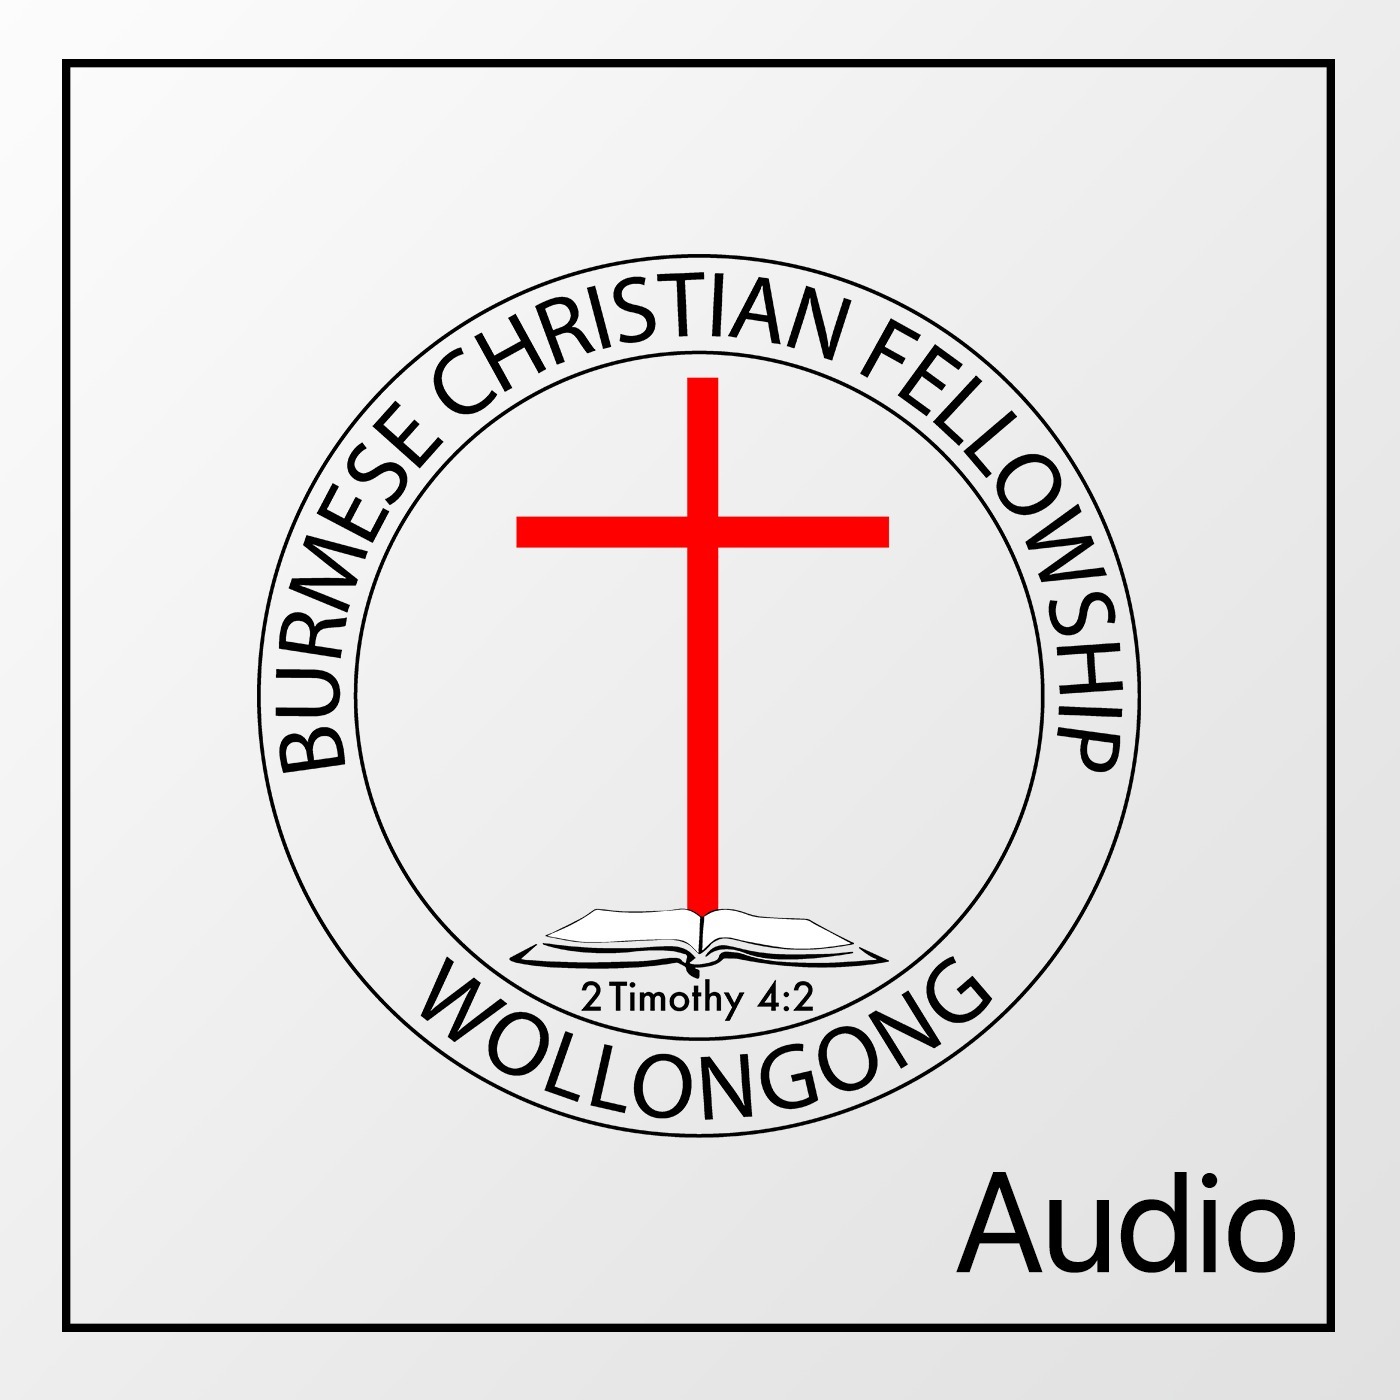 Wollongong Burmese Christian Fellowship